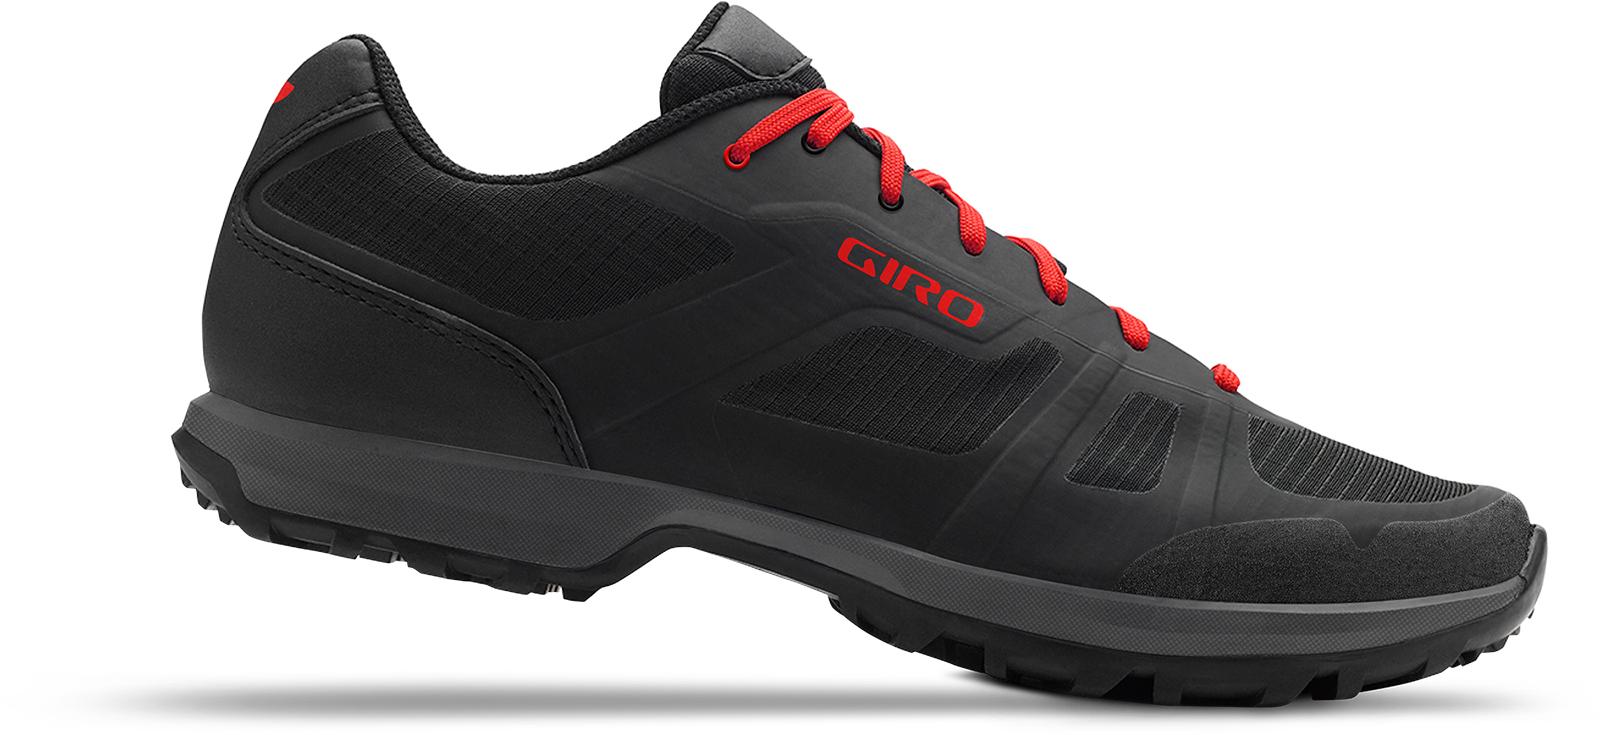 Giro Gauge Off Road Shoes - Black/red